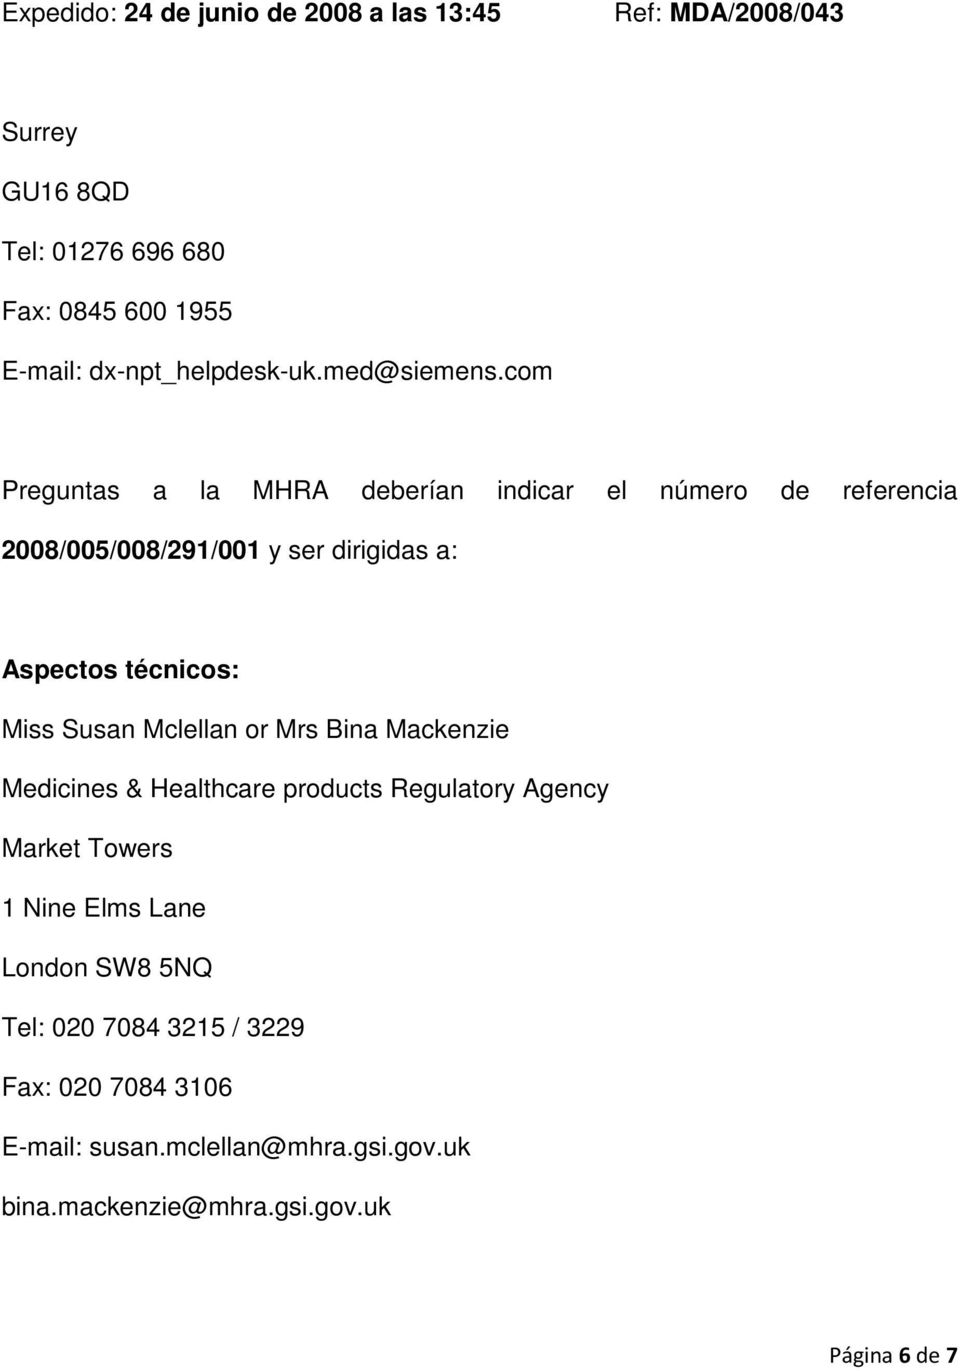 técnicos: Miss Susan Mclellan or Mrs Bina Mackenzie Medicines & Healthcare products Regulatory Agency Market Towers 1